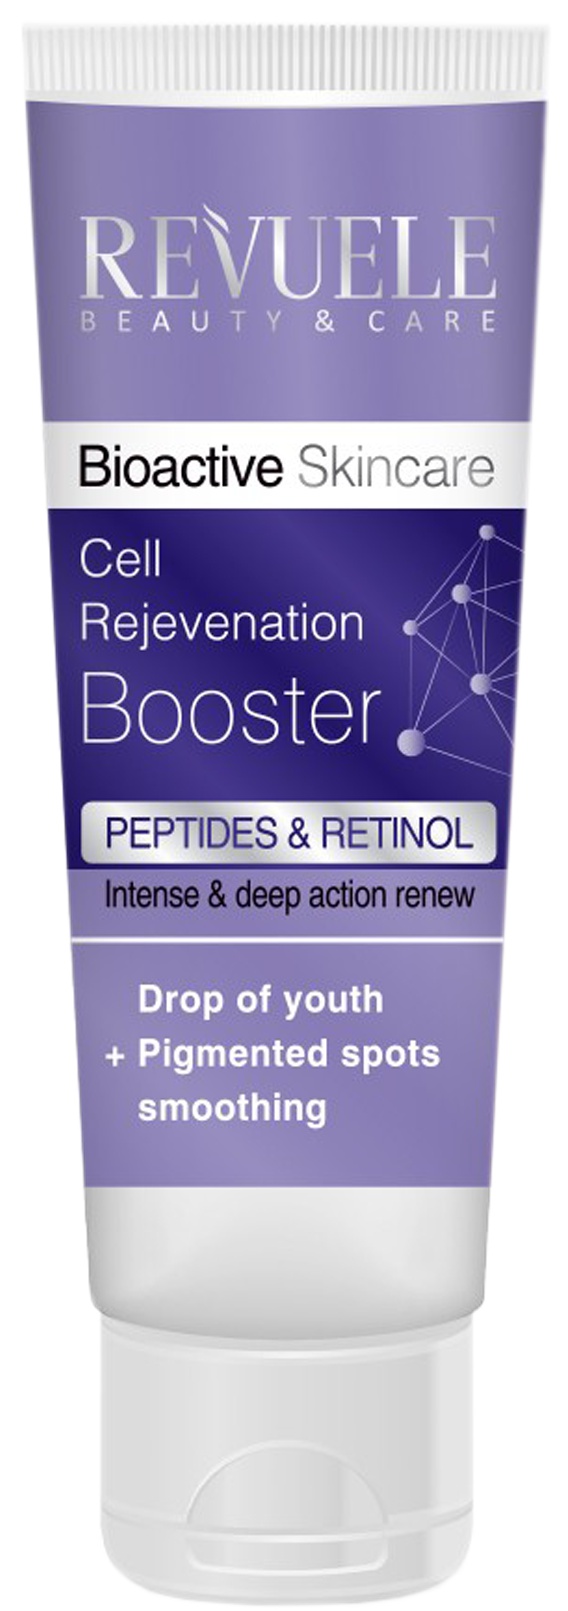 Revuele Bioactive Cell Rejuvenation Booster Peptides & Retinol